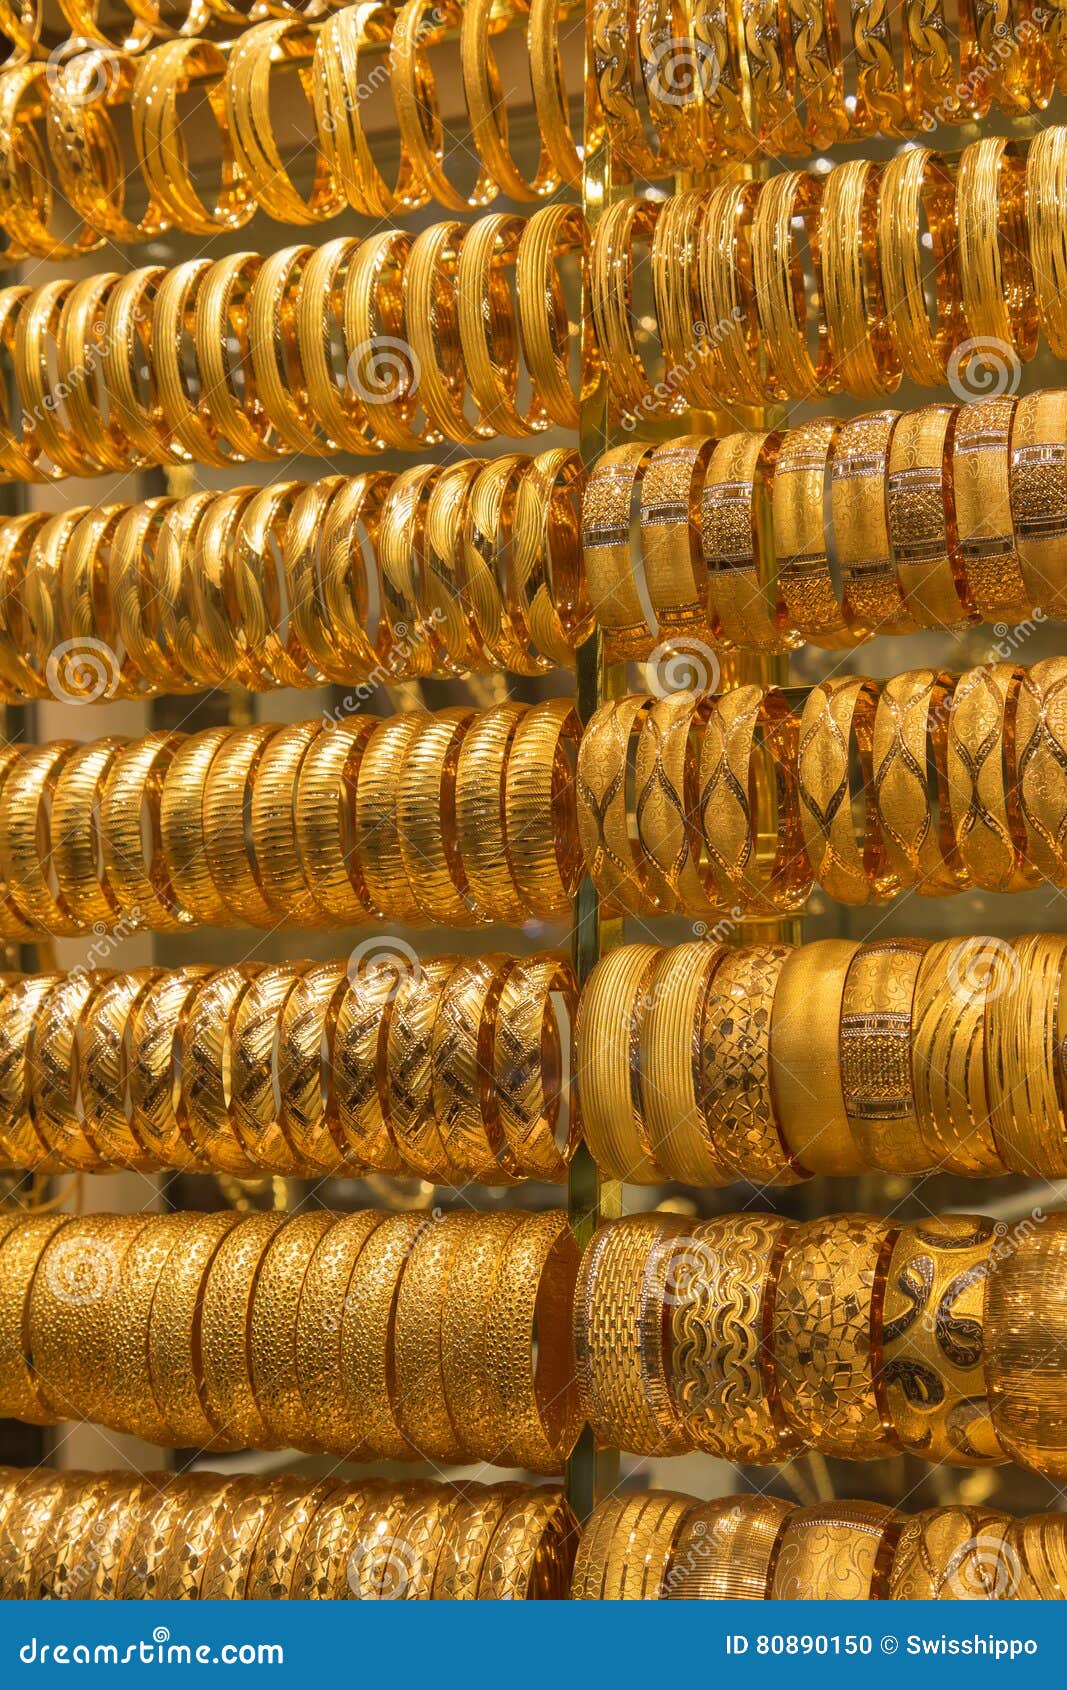 Golden market in Dubai stock photo. Image of business - 80890150